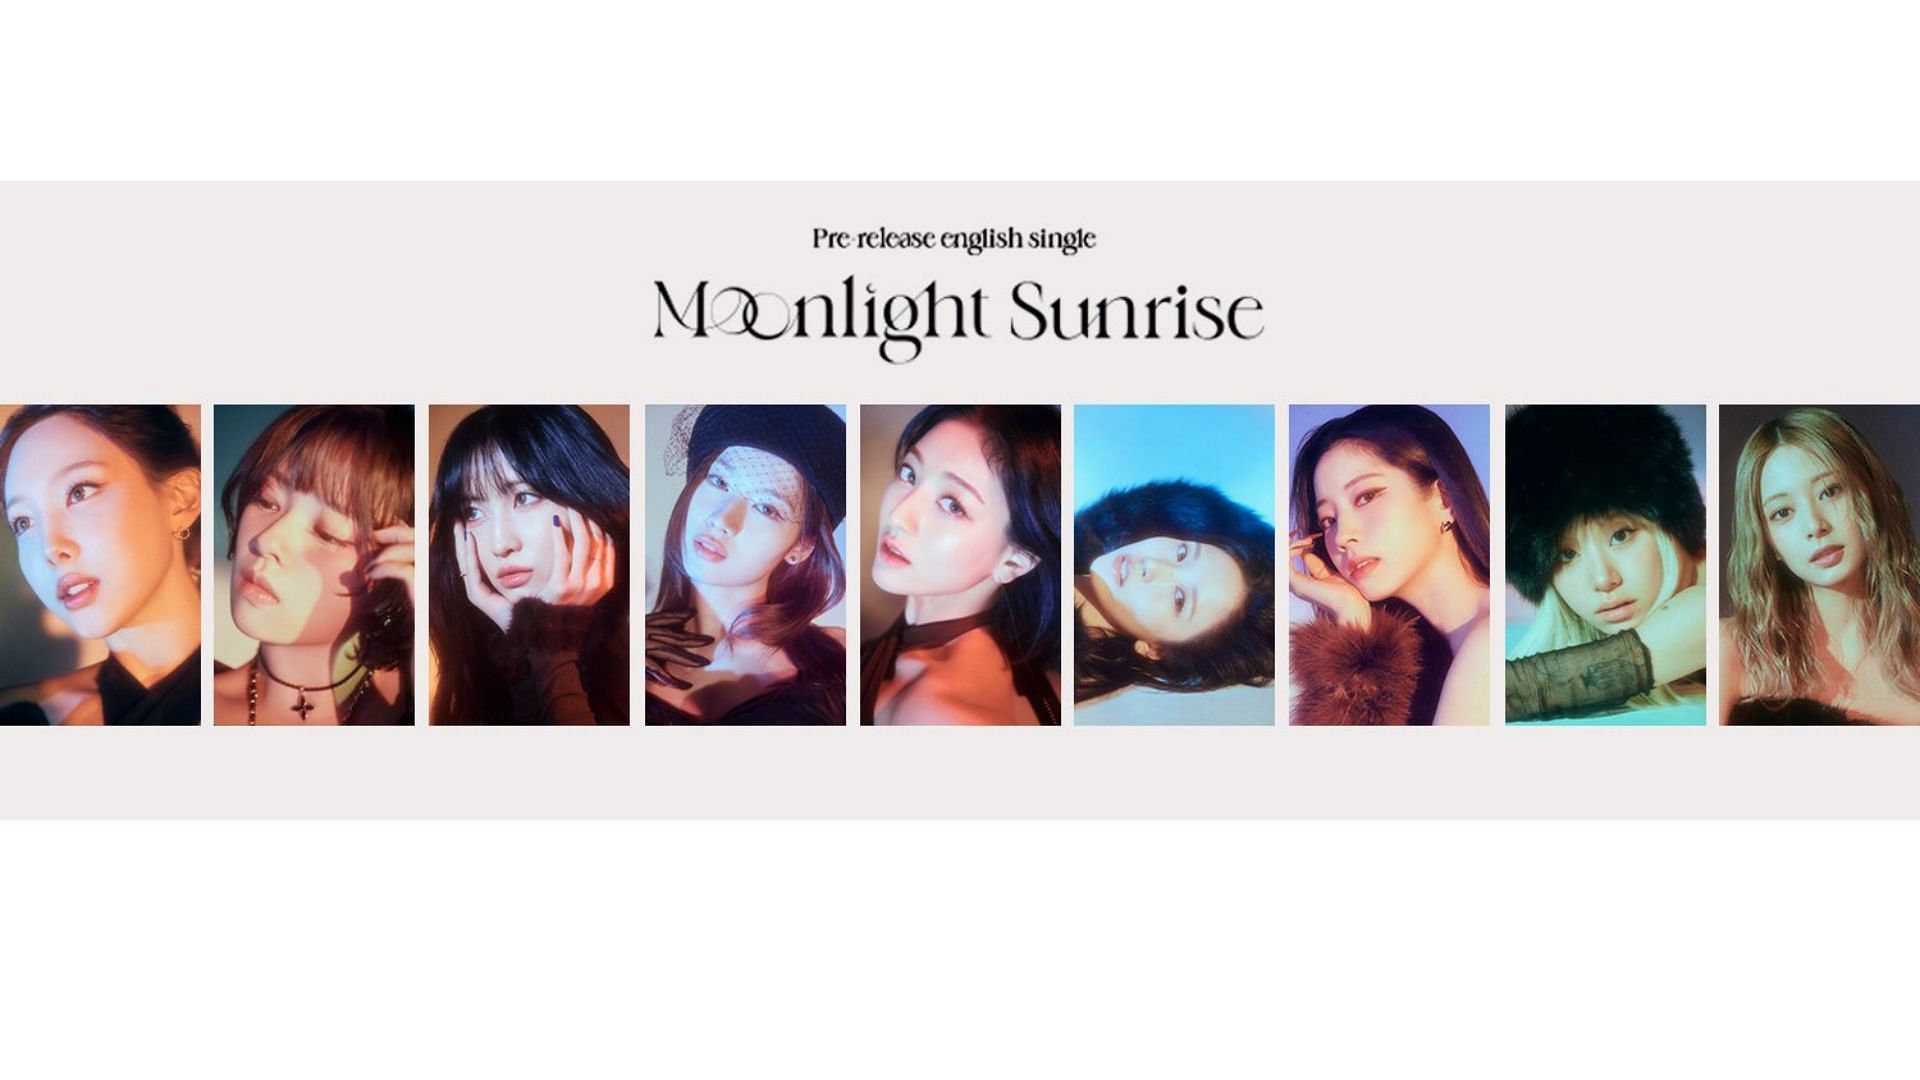 Twice to drop new English single 'Moonlight Sunrise